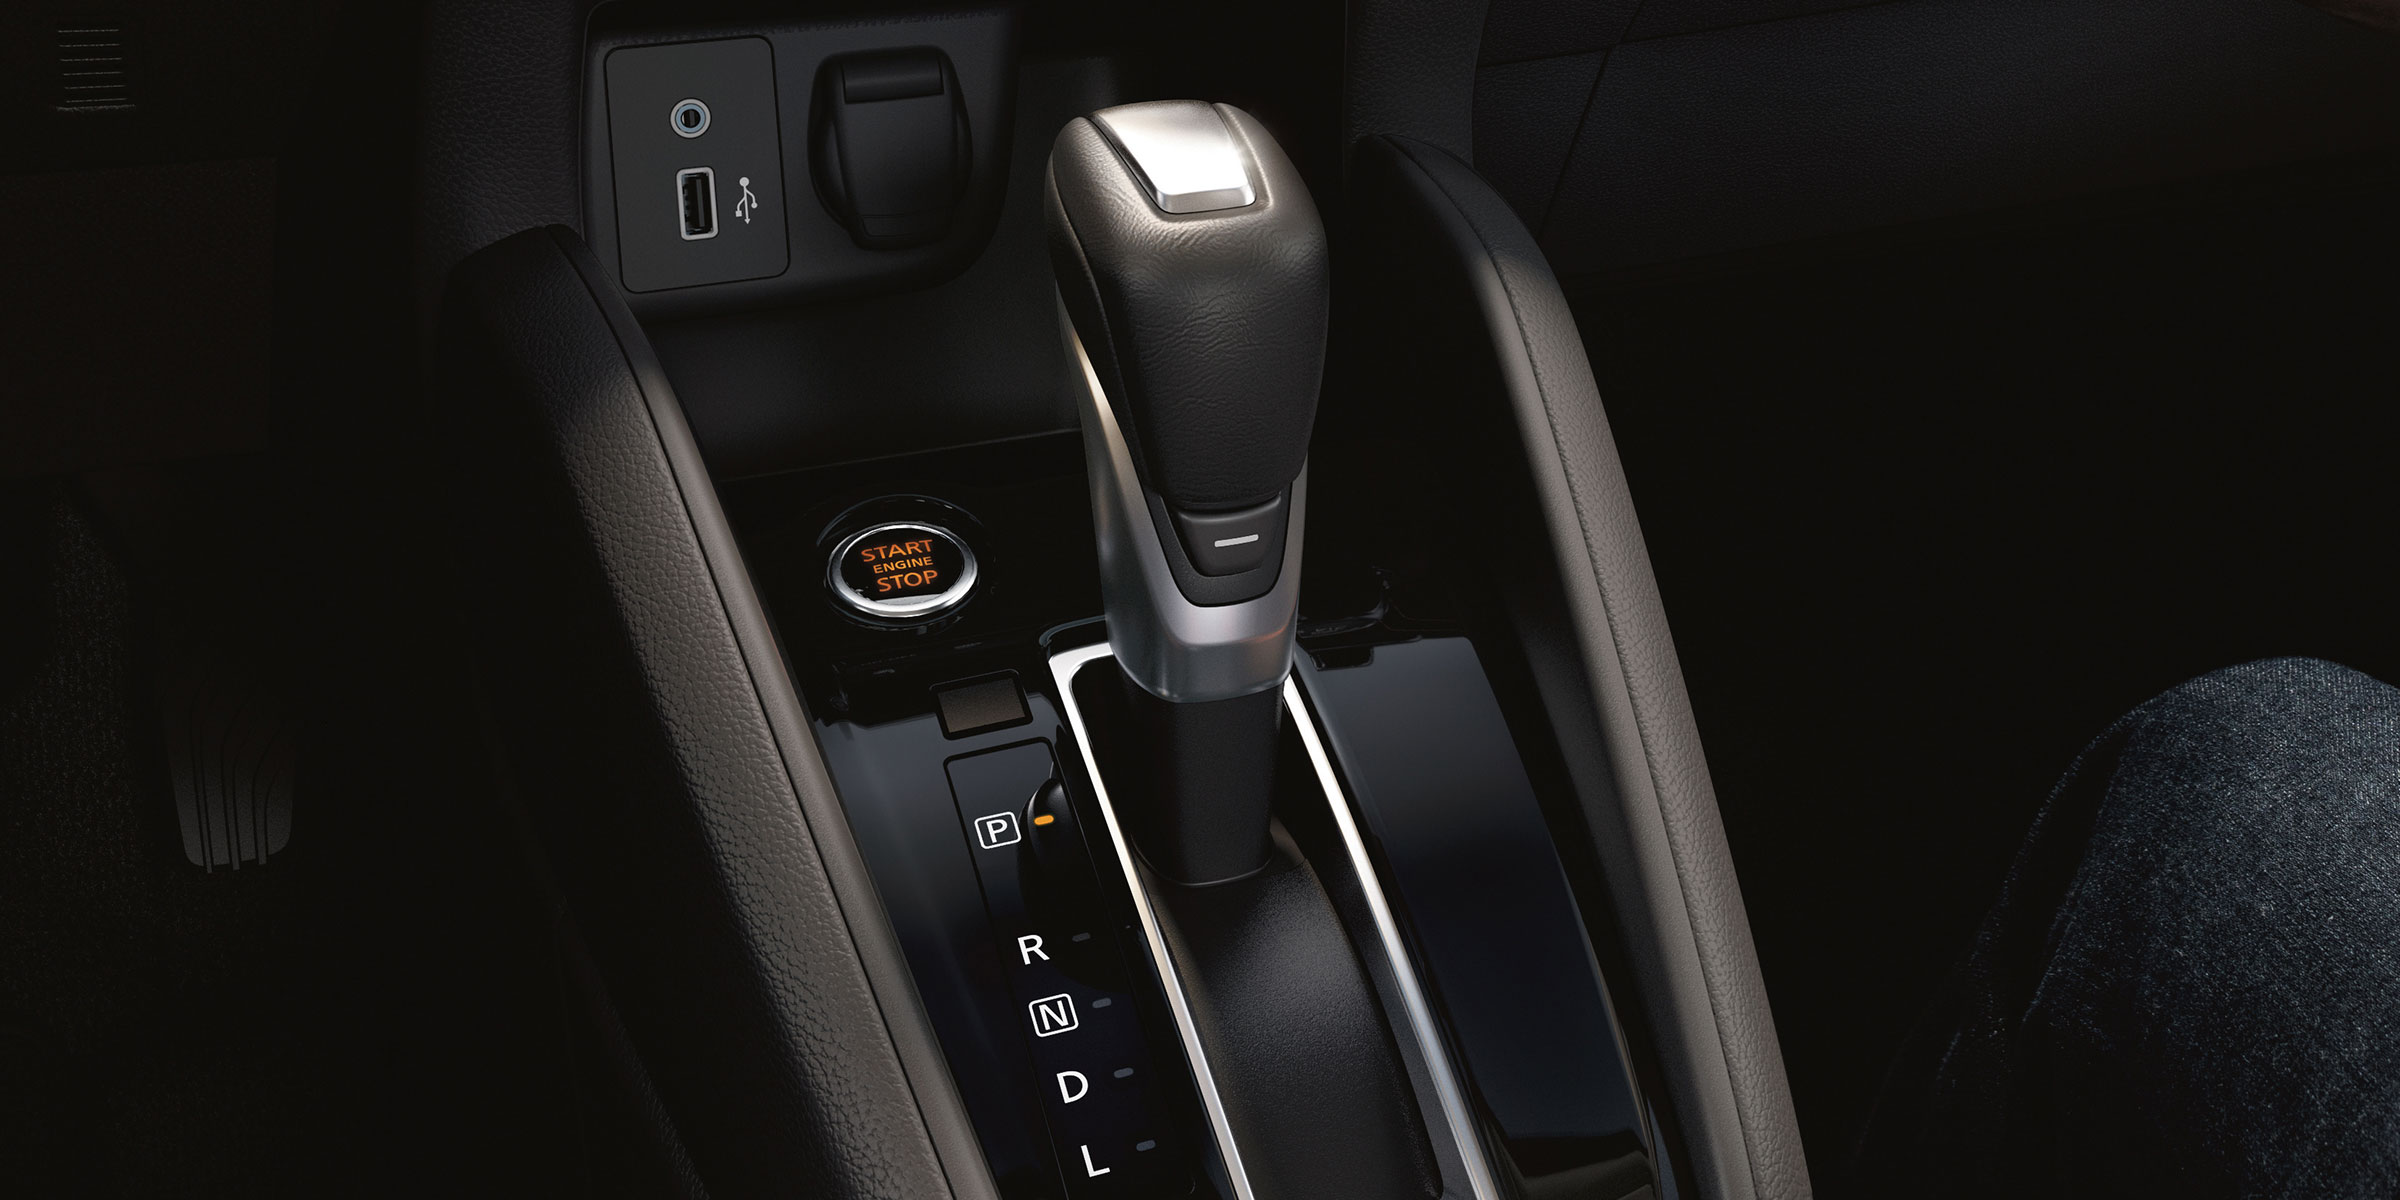 Nissan SUNNY interior showing shifter for CVT transmission